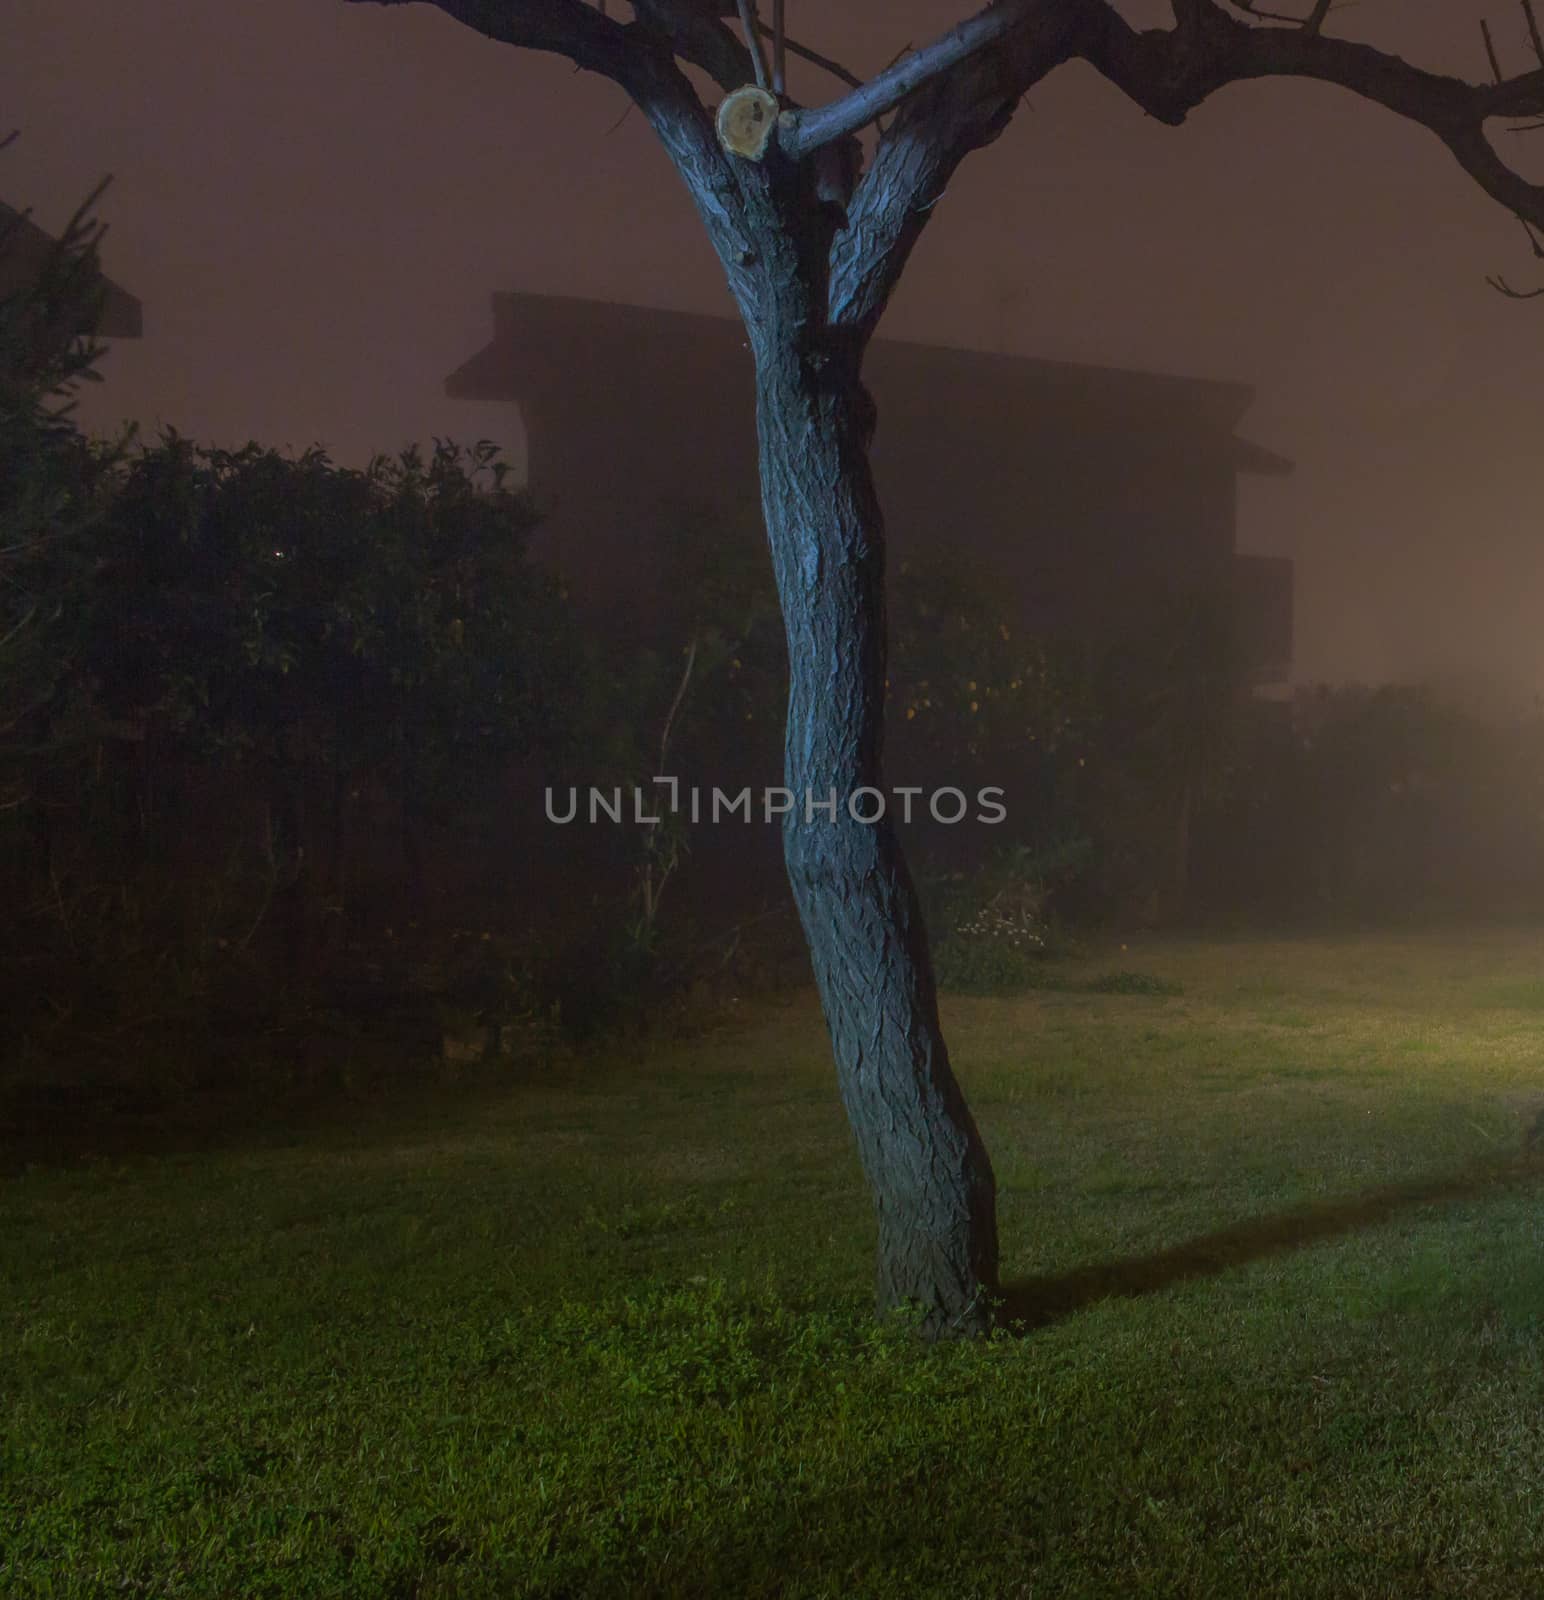 A very foggy evening by alanstix64